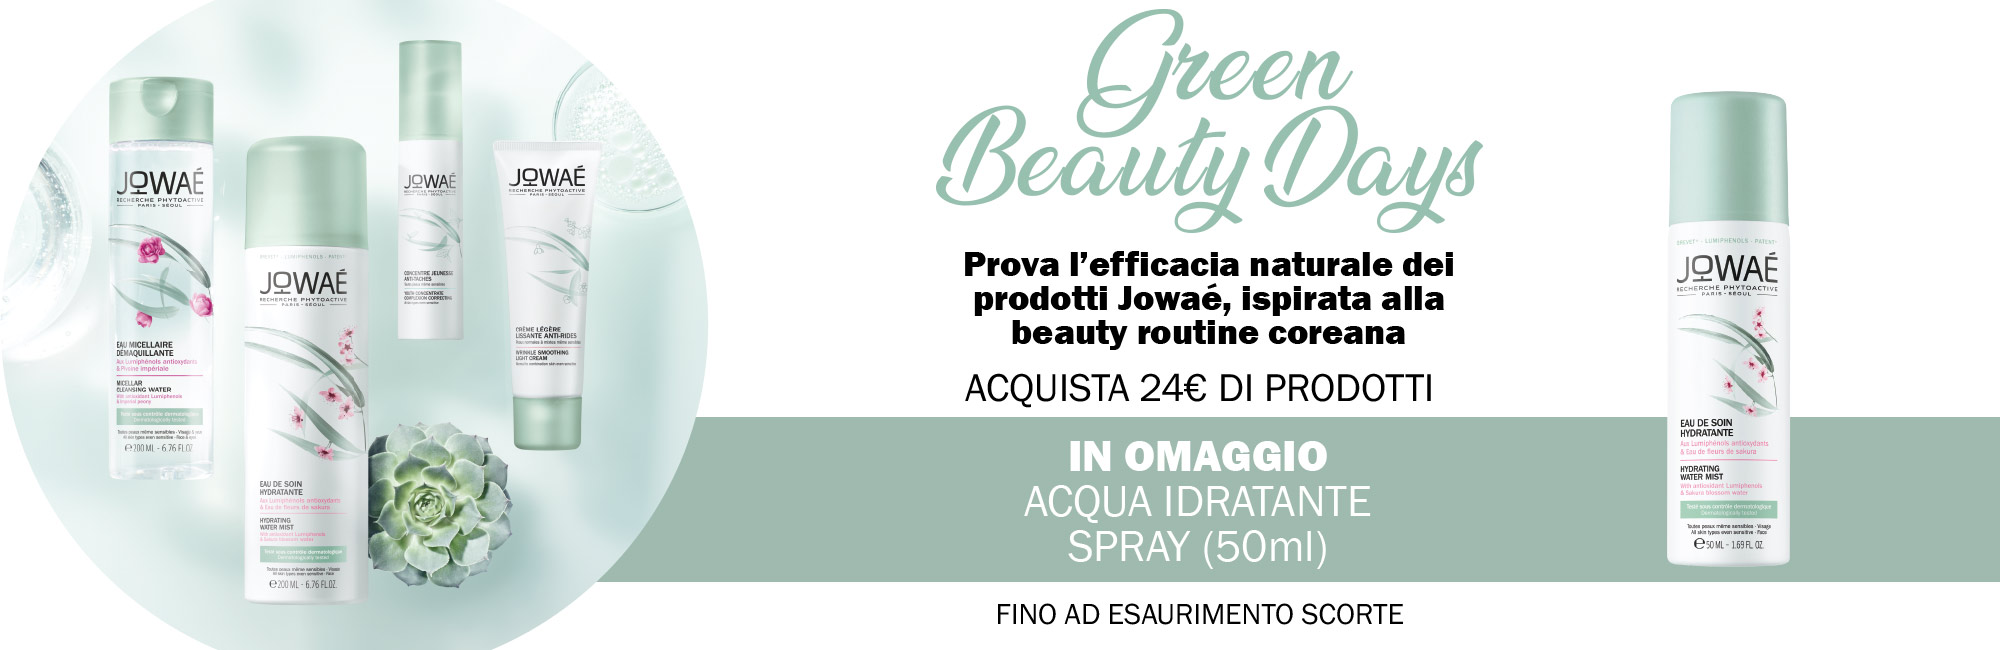 Easyfarma presenta: i Green Beauty Days Jowae